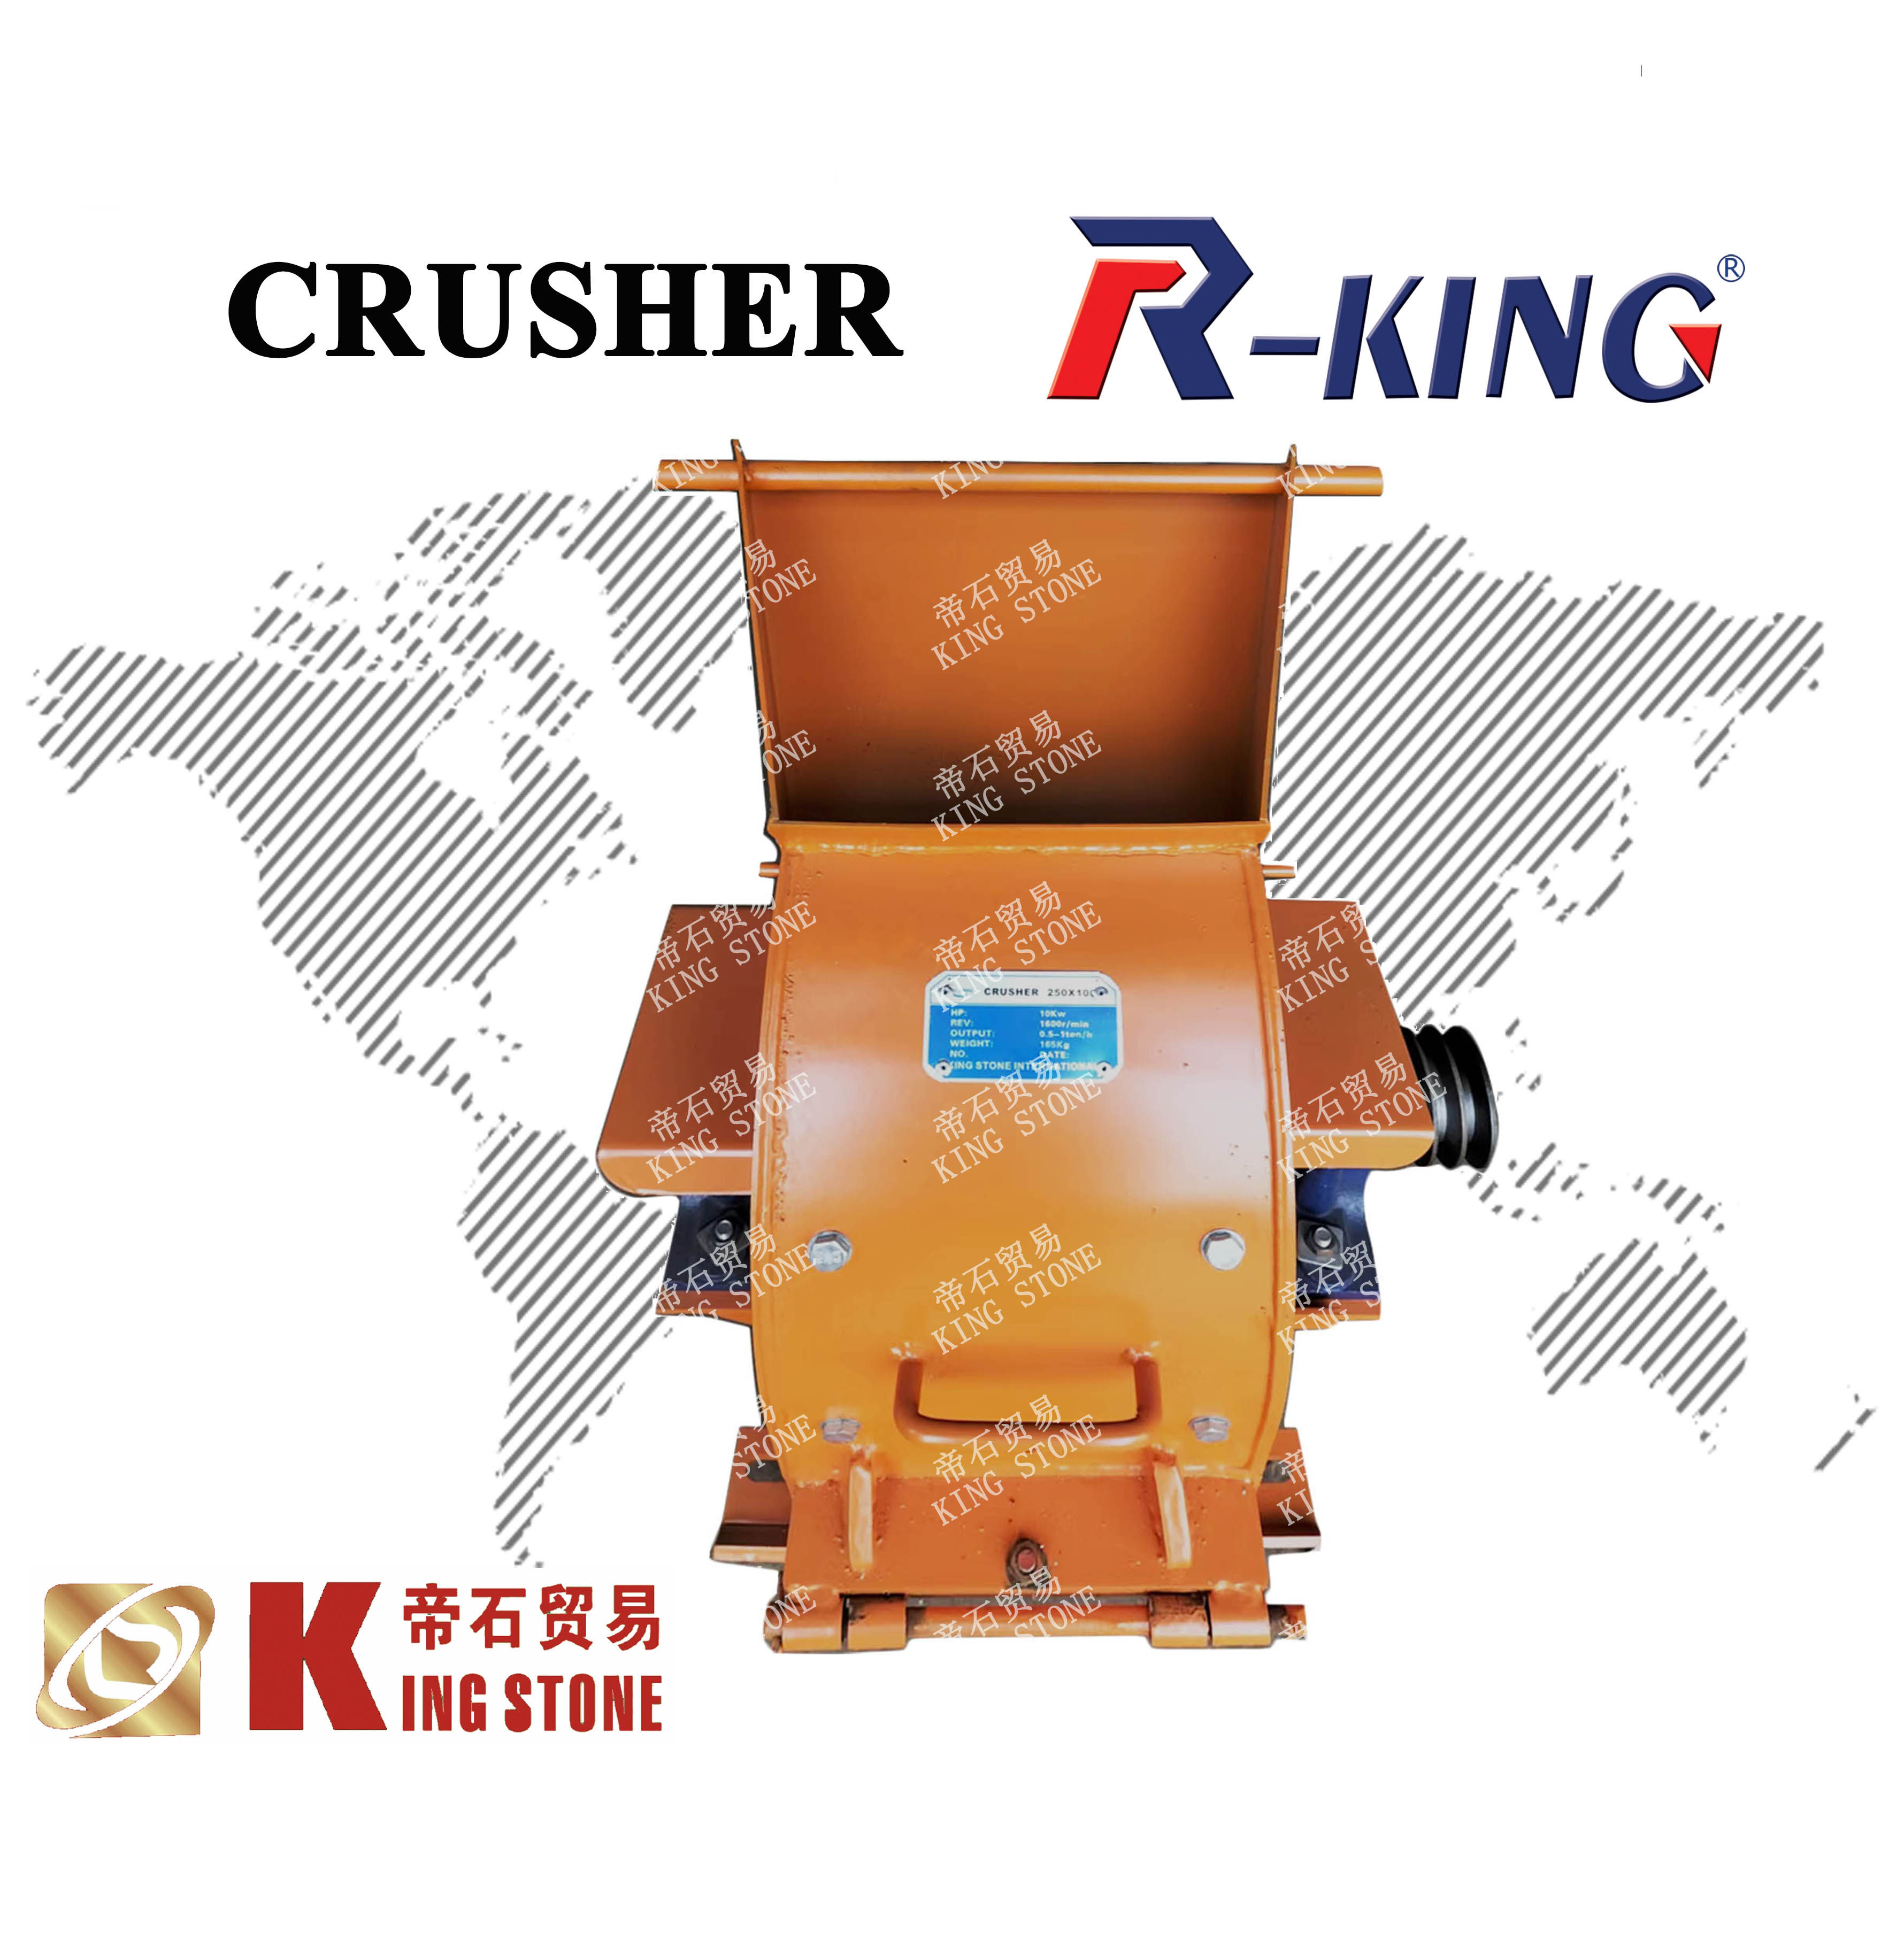 R-KING CRUSHER STONE